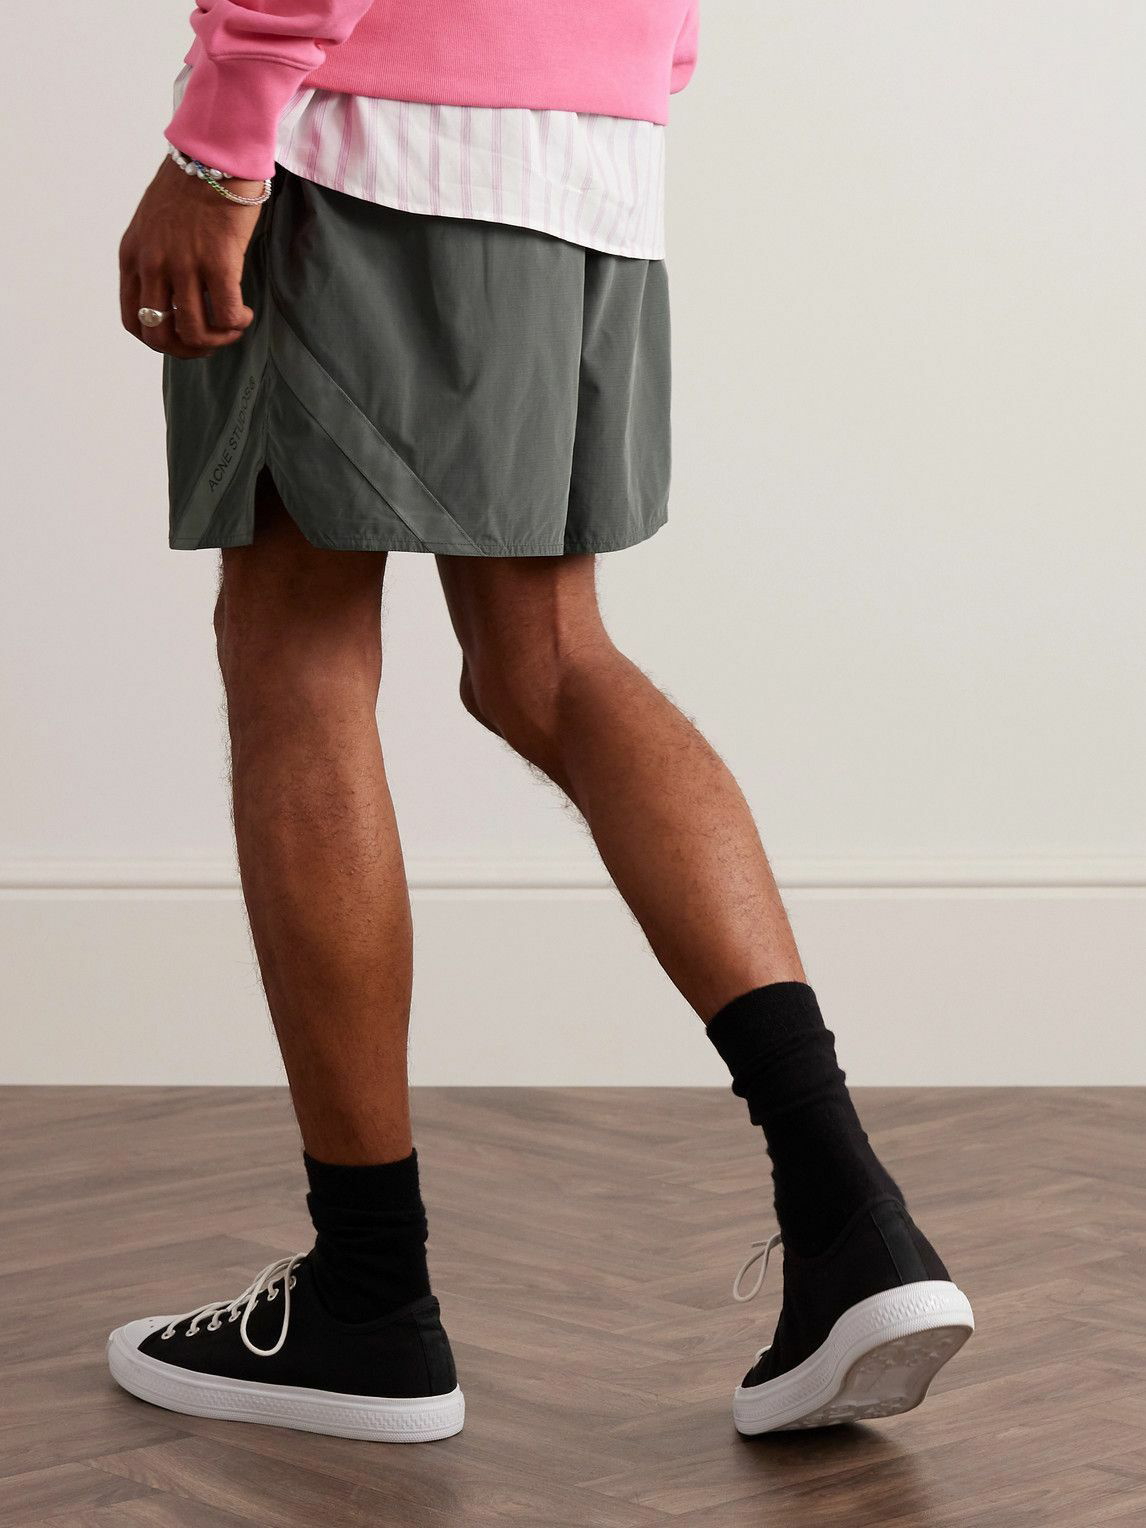 Acne Studios Men's Printed Shorts